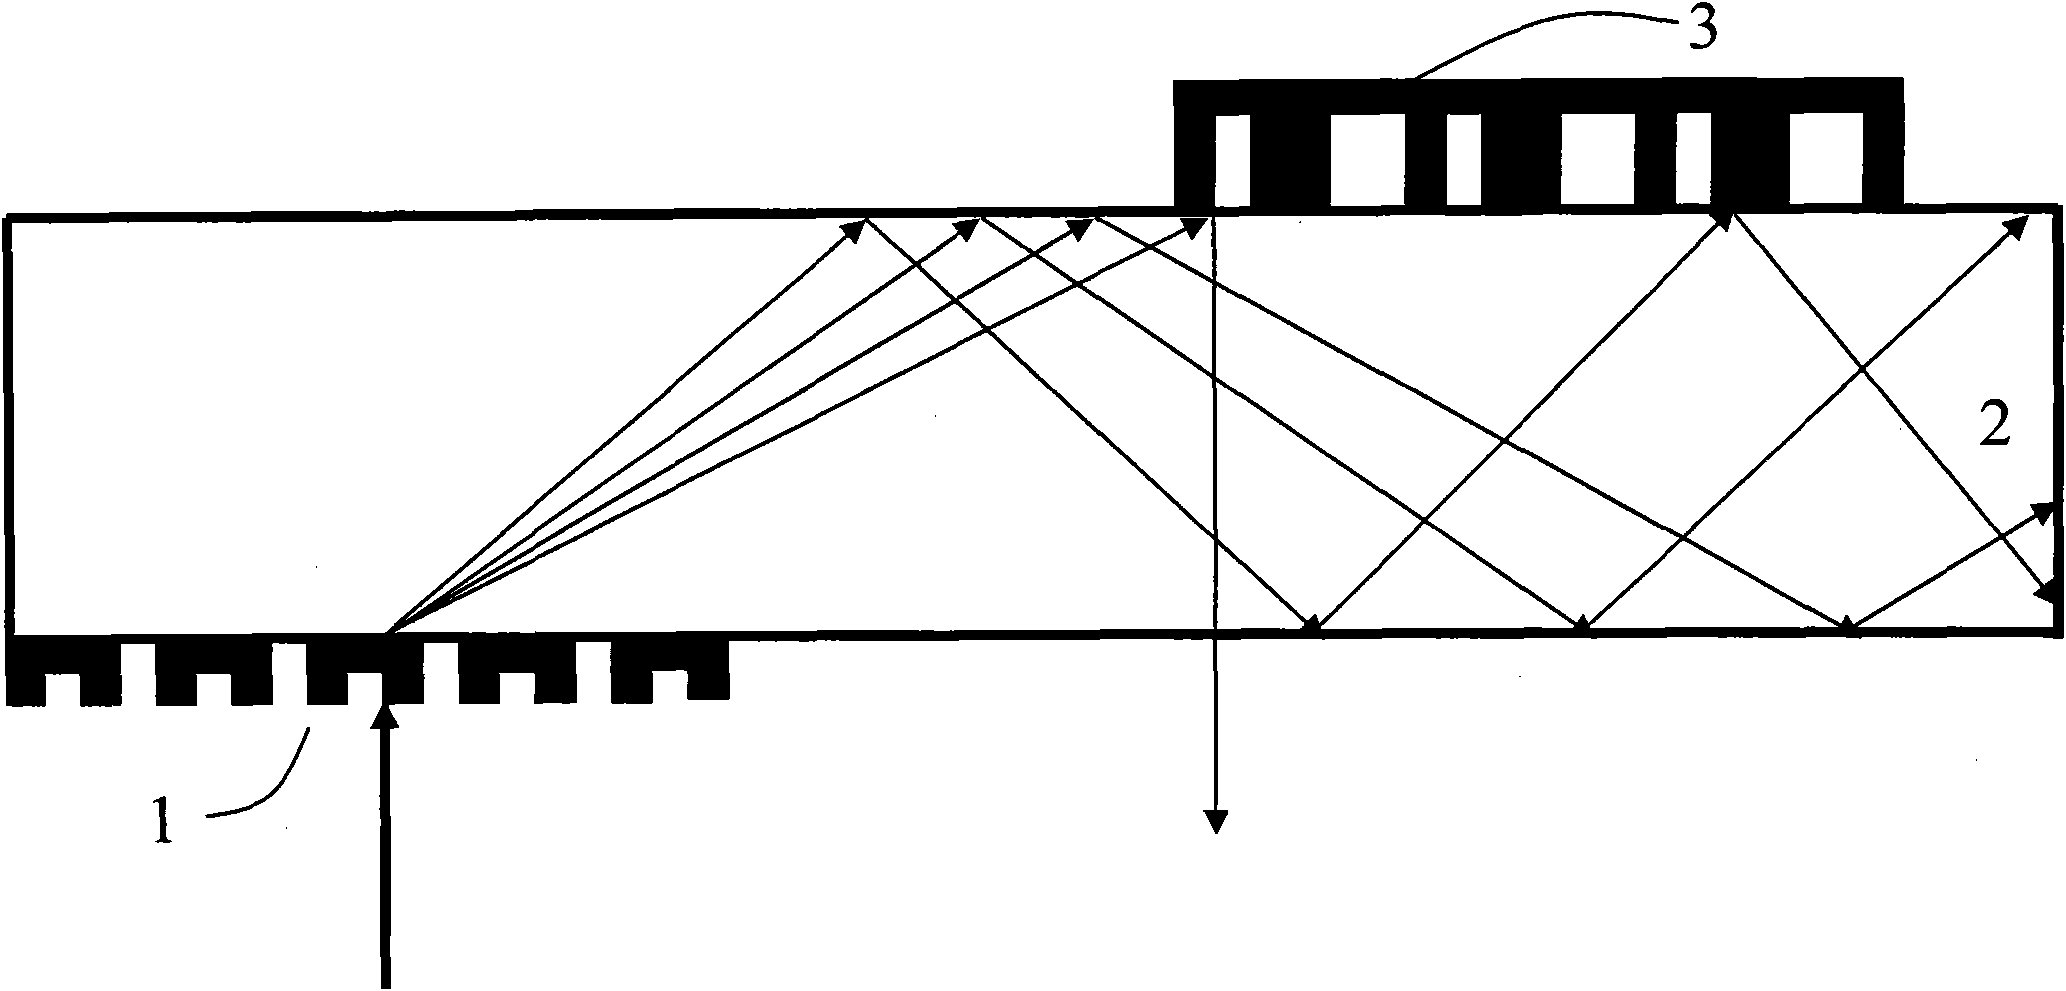 Subwavelength binary diffraction grating-based wavelength separator